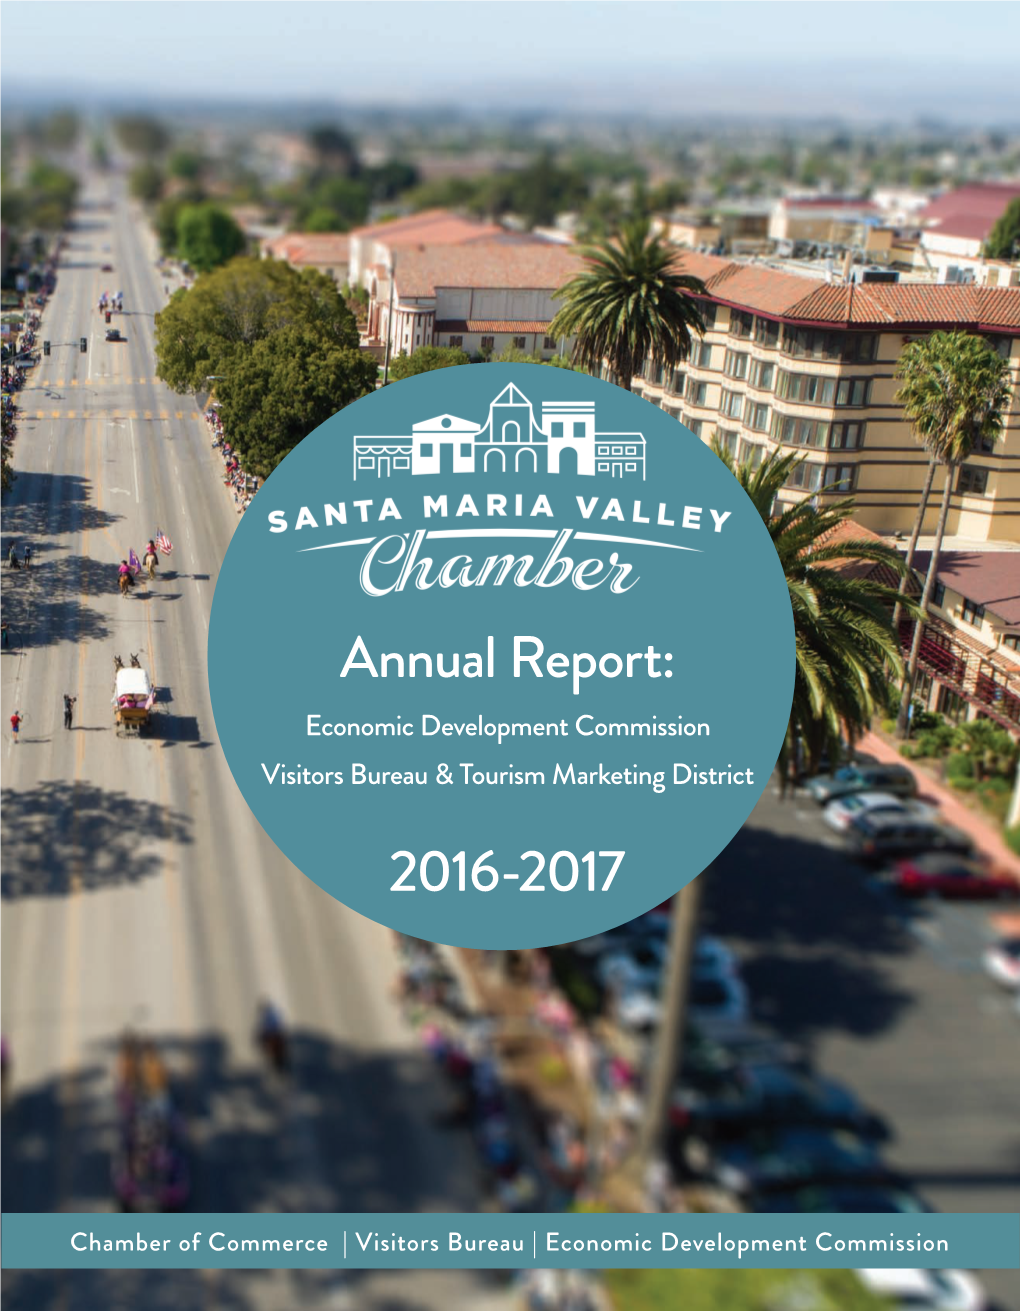 Annual Report: 2016-2017